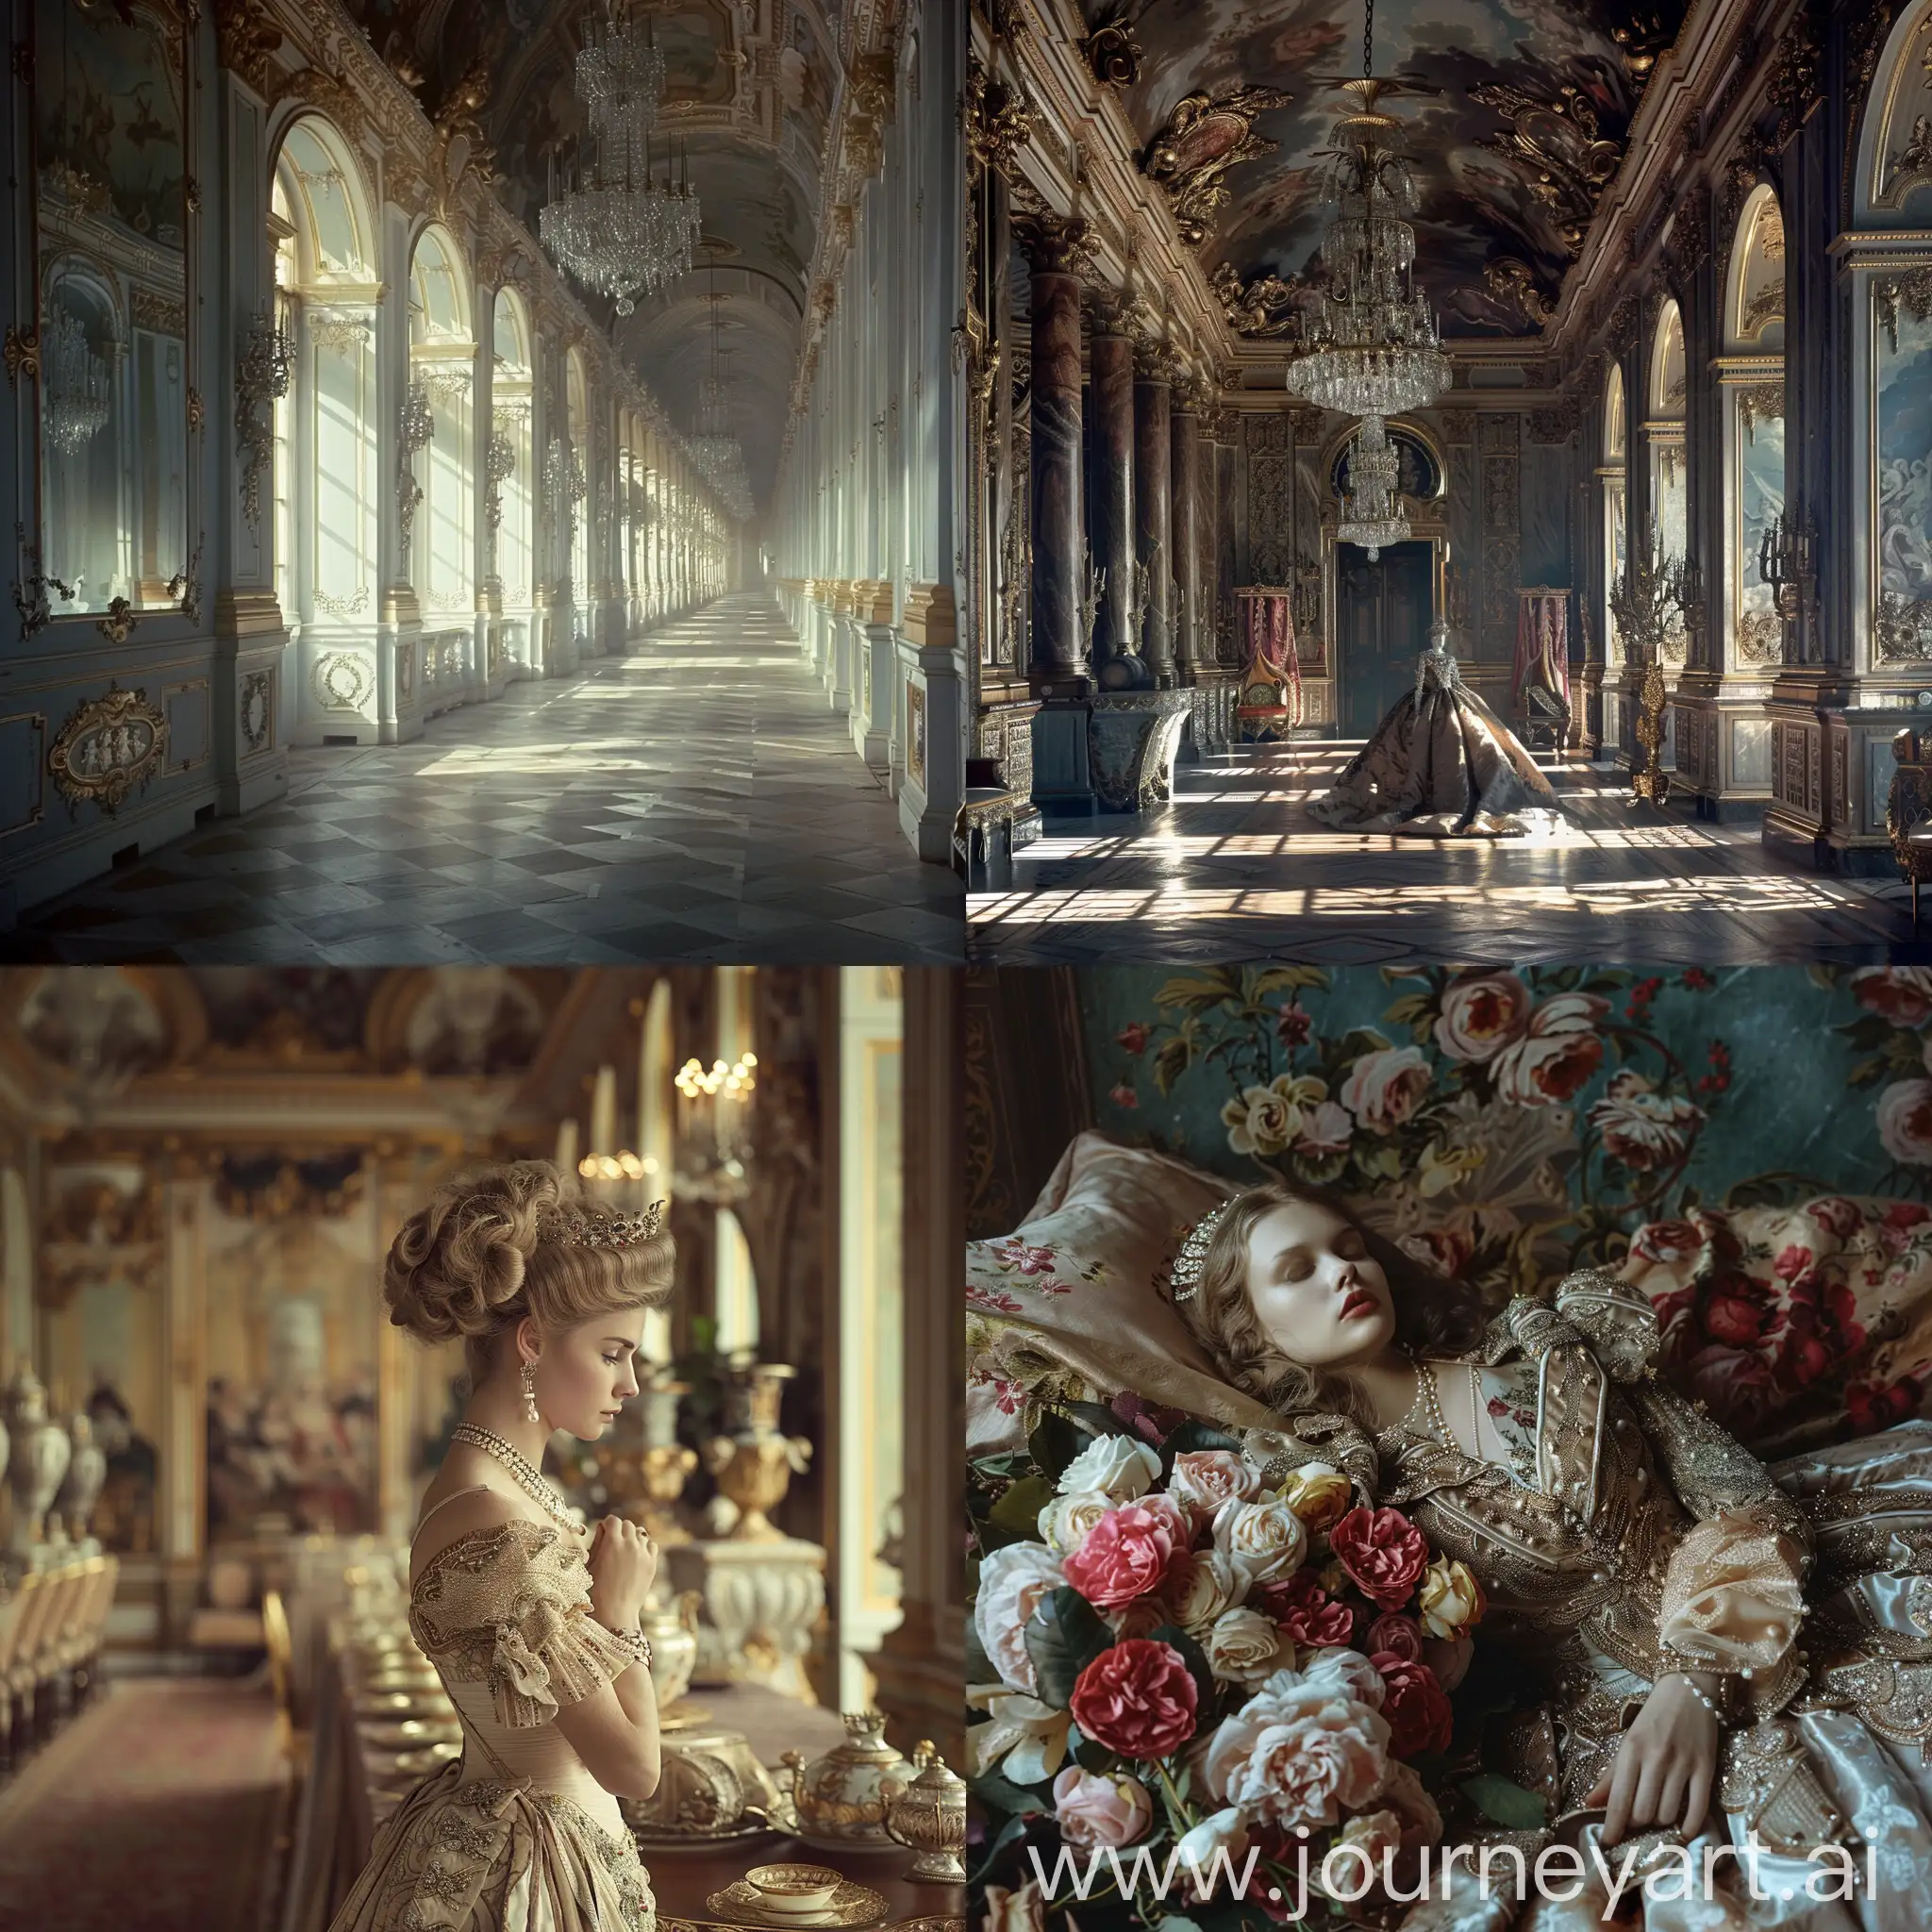 Royal-Masterpiece-Photography-Captivating-Beauty-in-a-Random-Scene